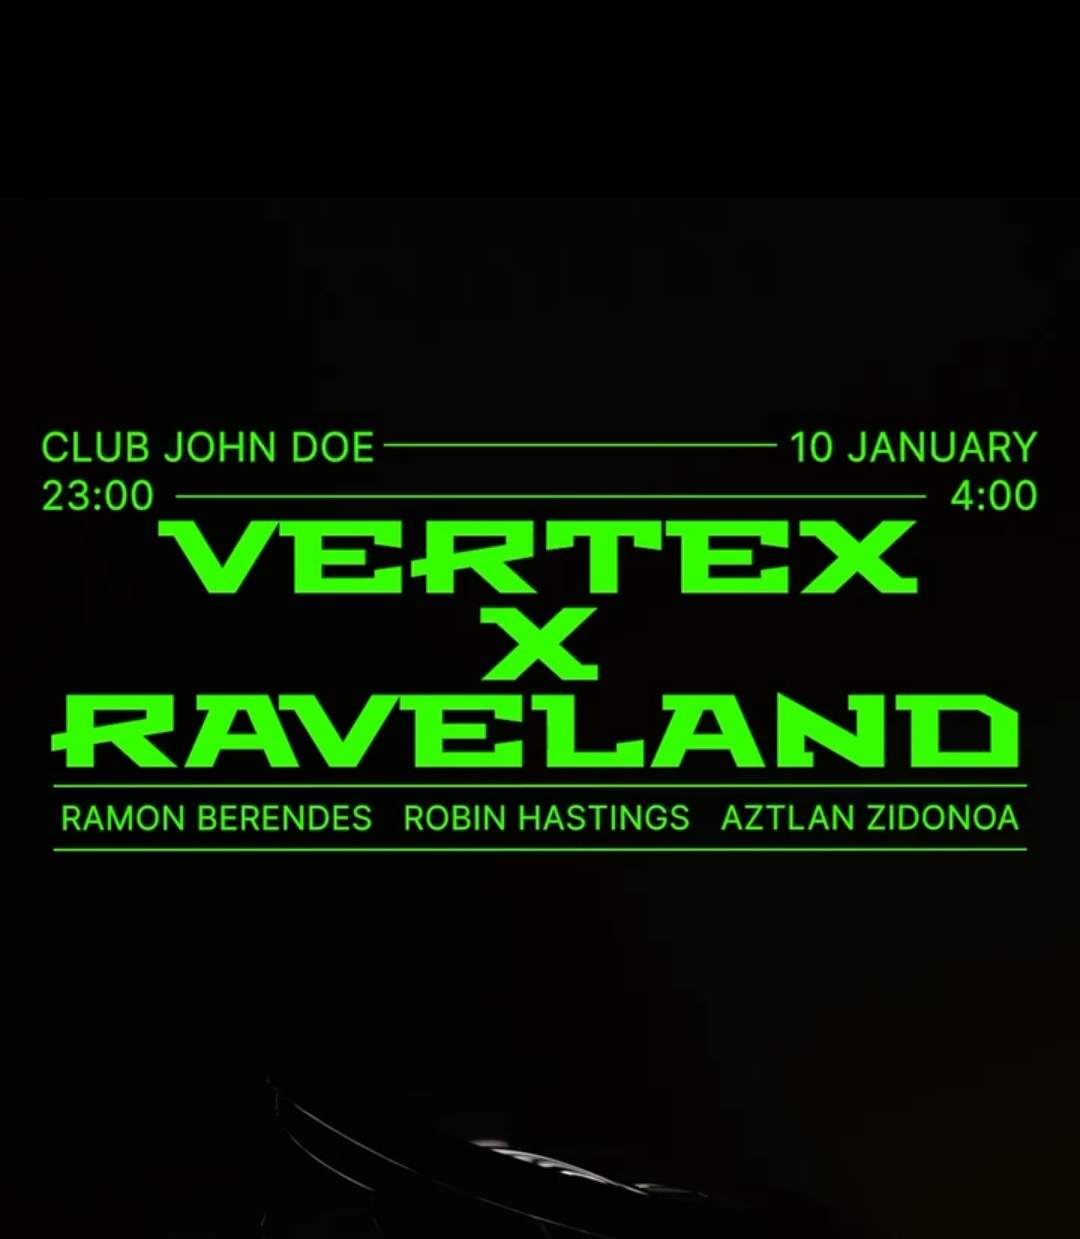 RAVELAND x VERTEX: Hardtechno Rave w/ Robin Hastings, Ramon Benderes & Aztlan Zidonia - フライヤー裏